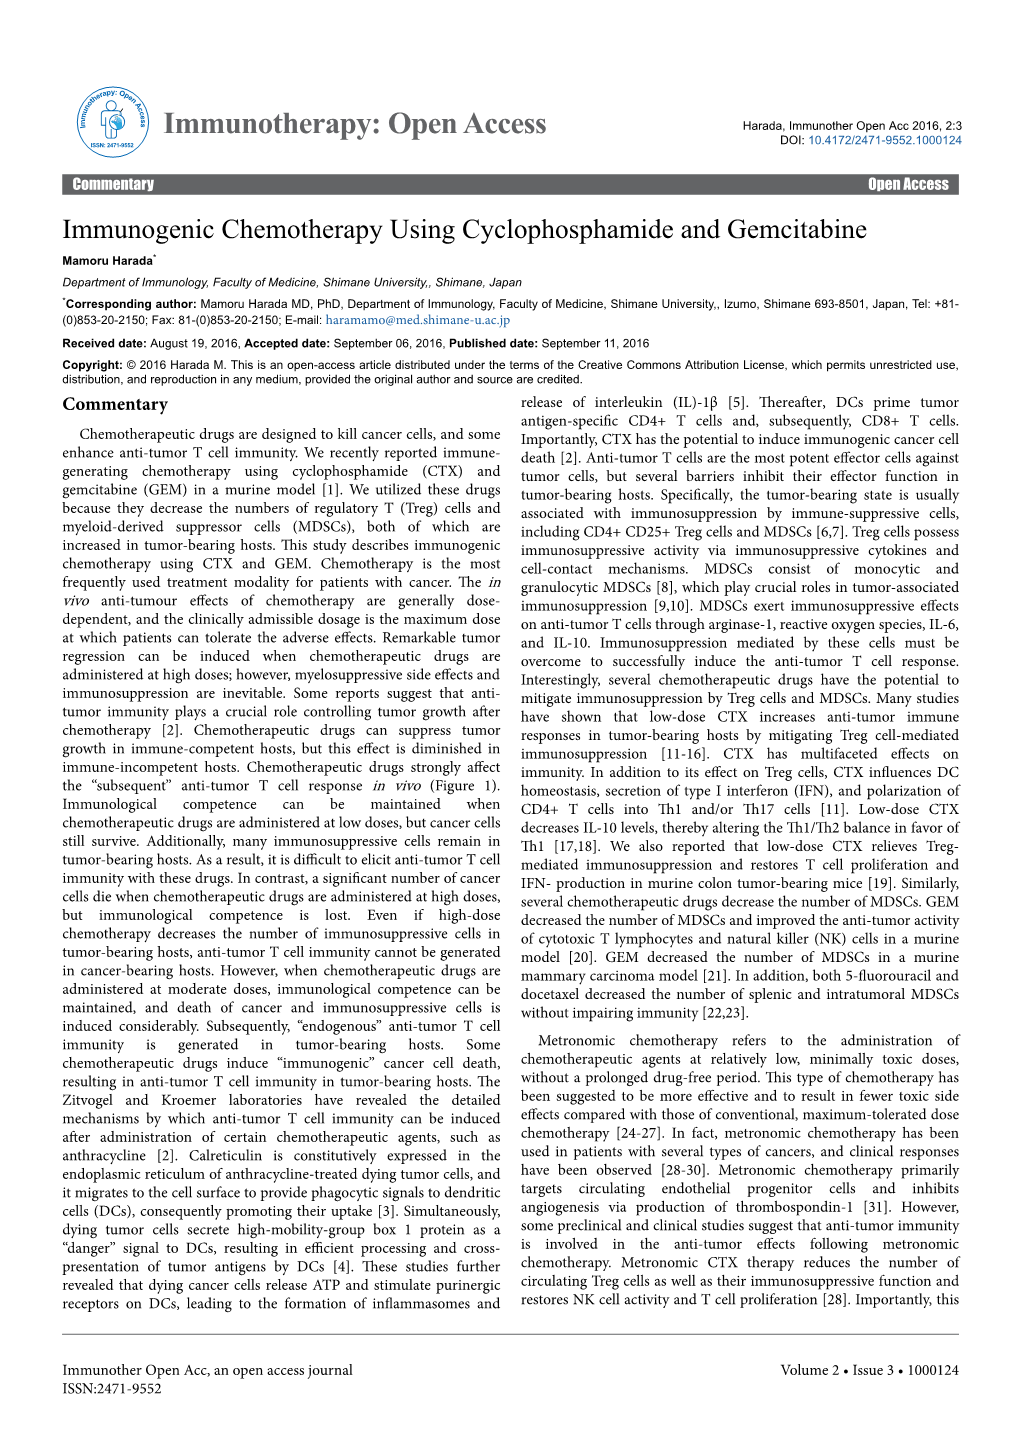 Immunogenic Chemotherapy Using Cyclophosphamide and Gemcitabine